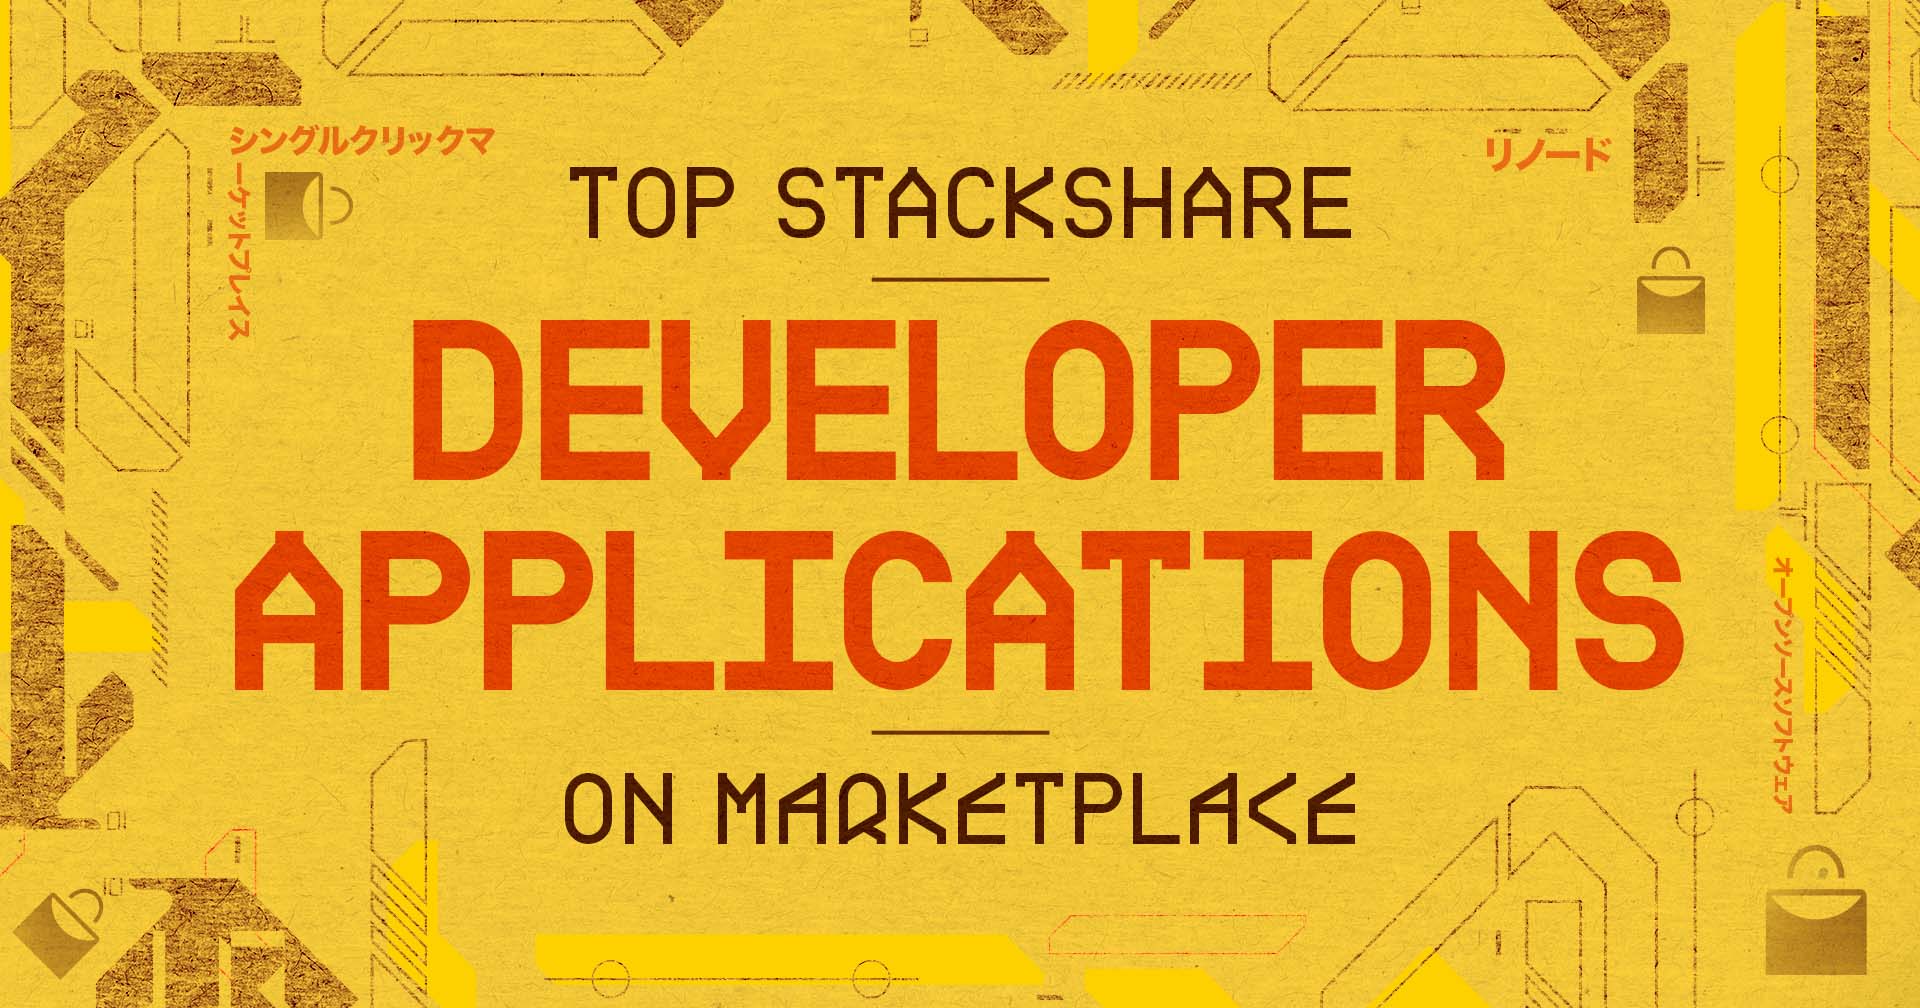 I migliori strumenti per sviluppatori di StackShare